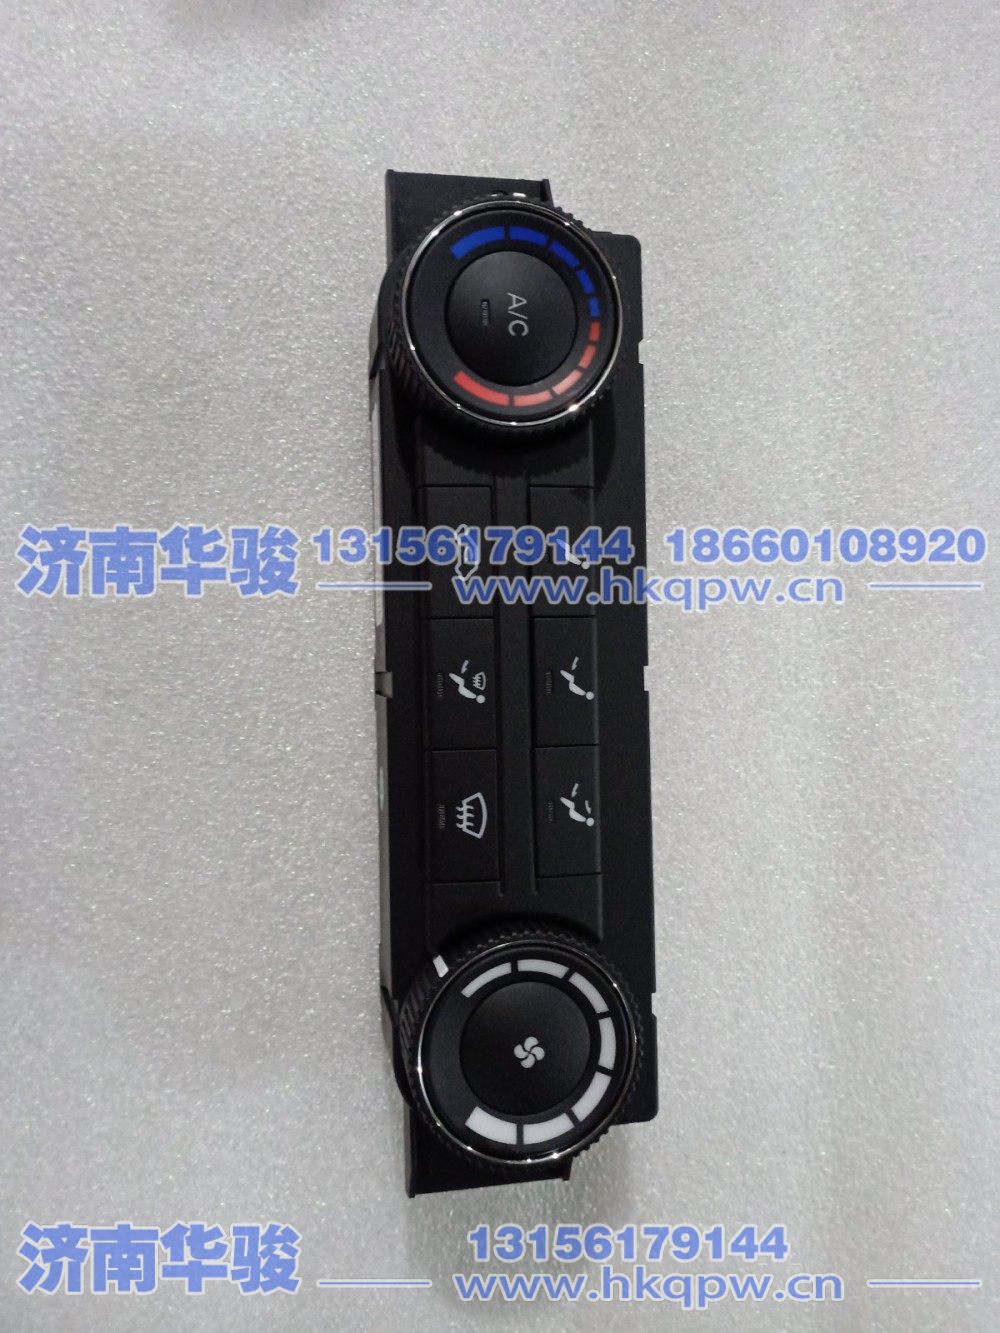 81AA1N-12010,控制面板总成,济南华骏汽车贸易有限公司